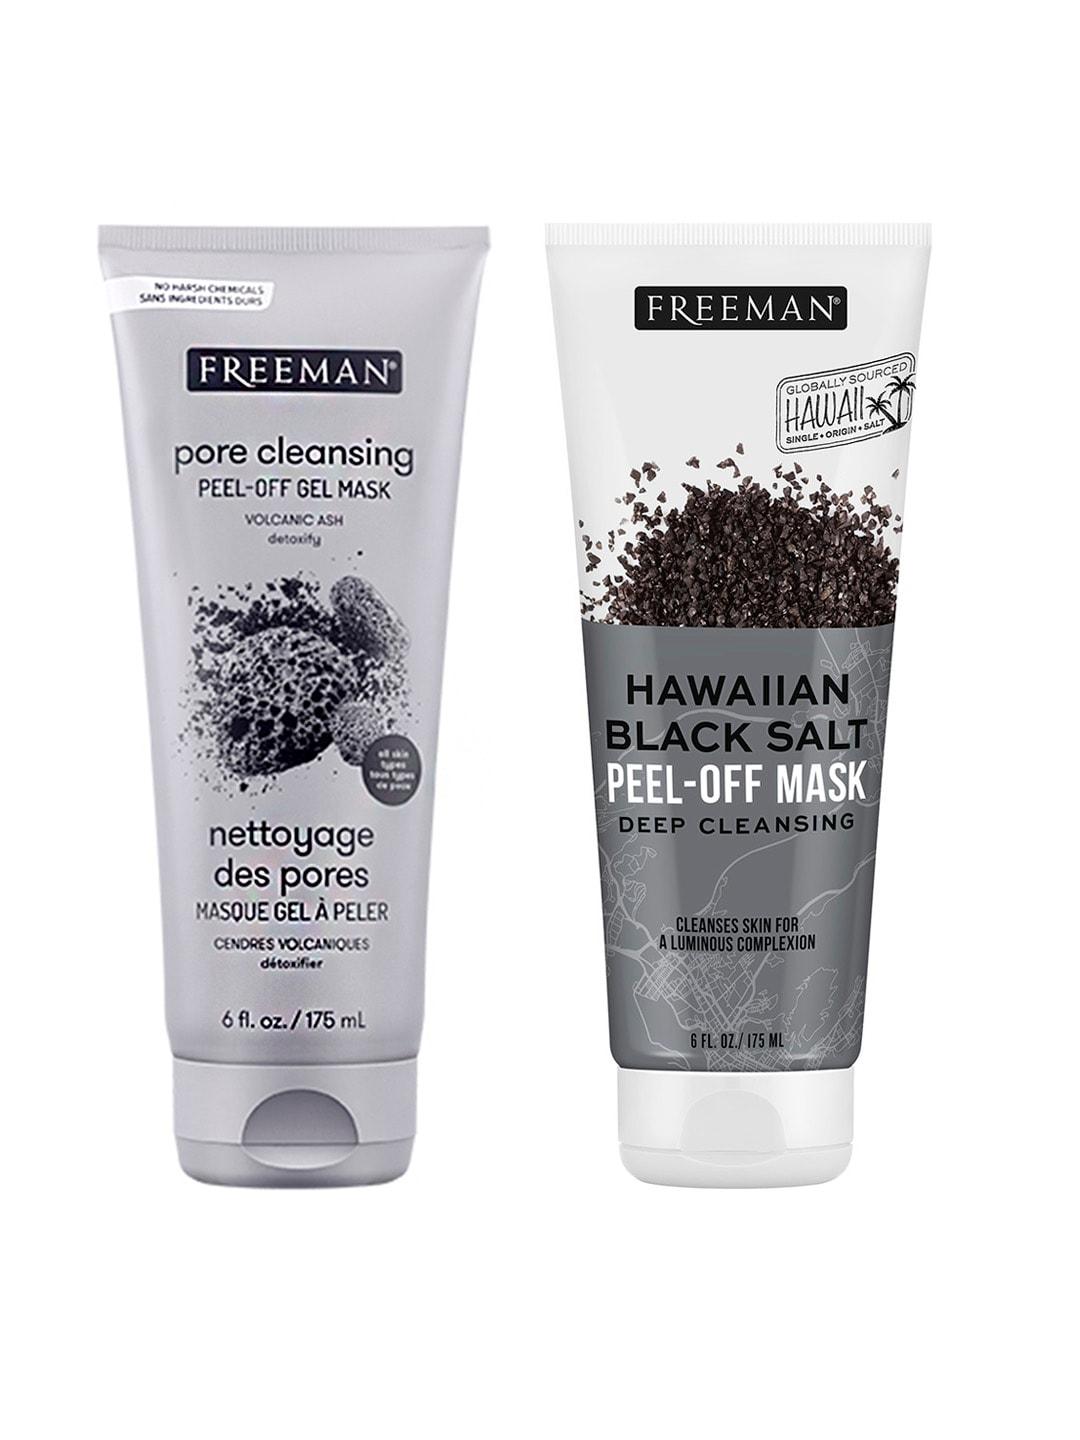 FREEMAN Set of 2 Peel-Off Masks - Hawaiian Black Salt & Pore Cleansing - 175ml each